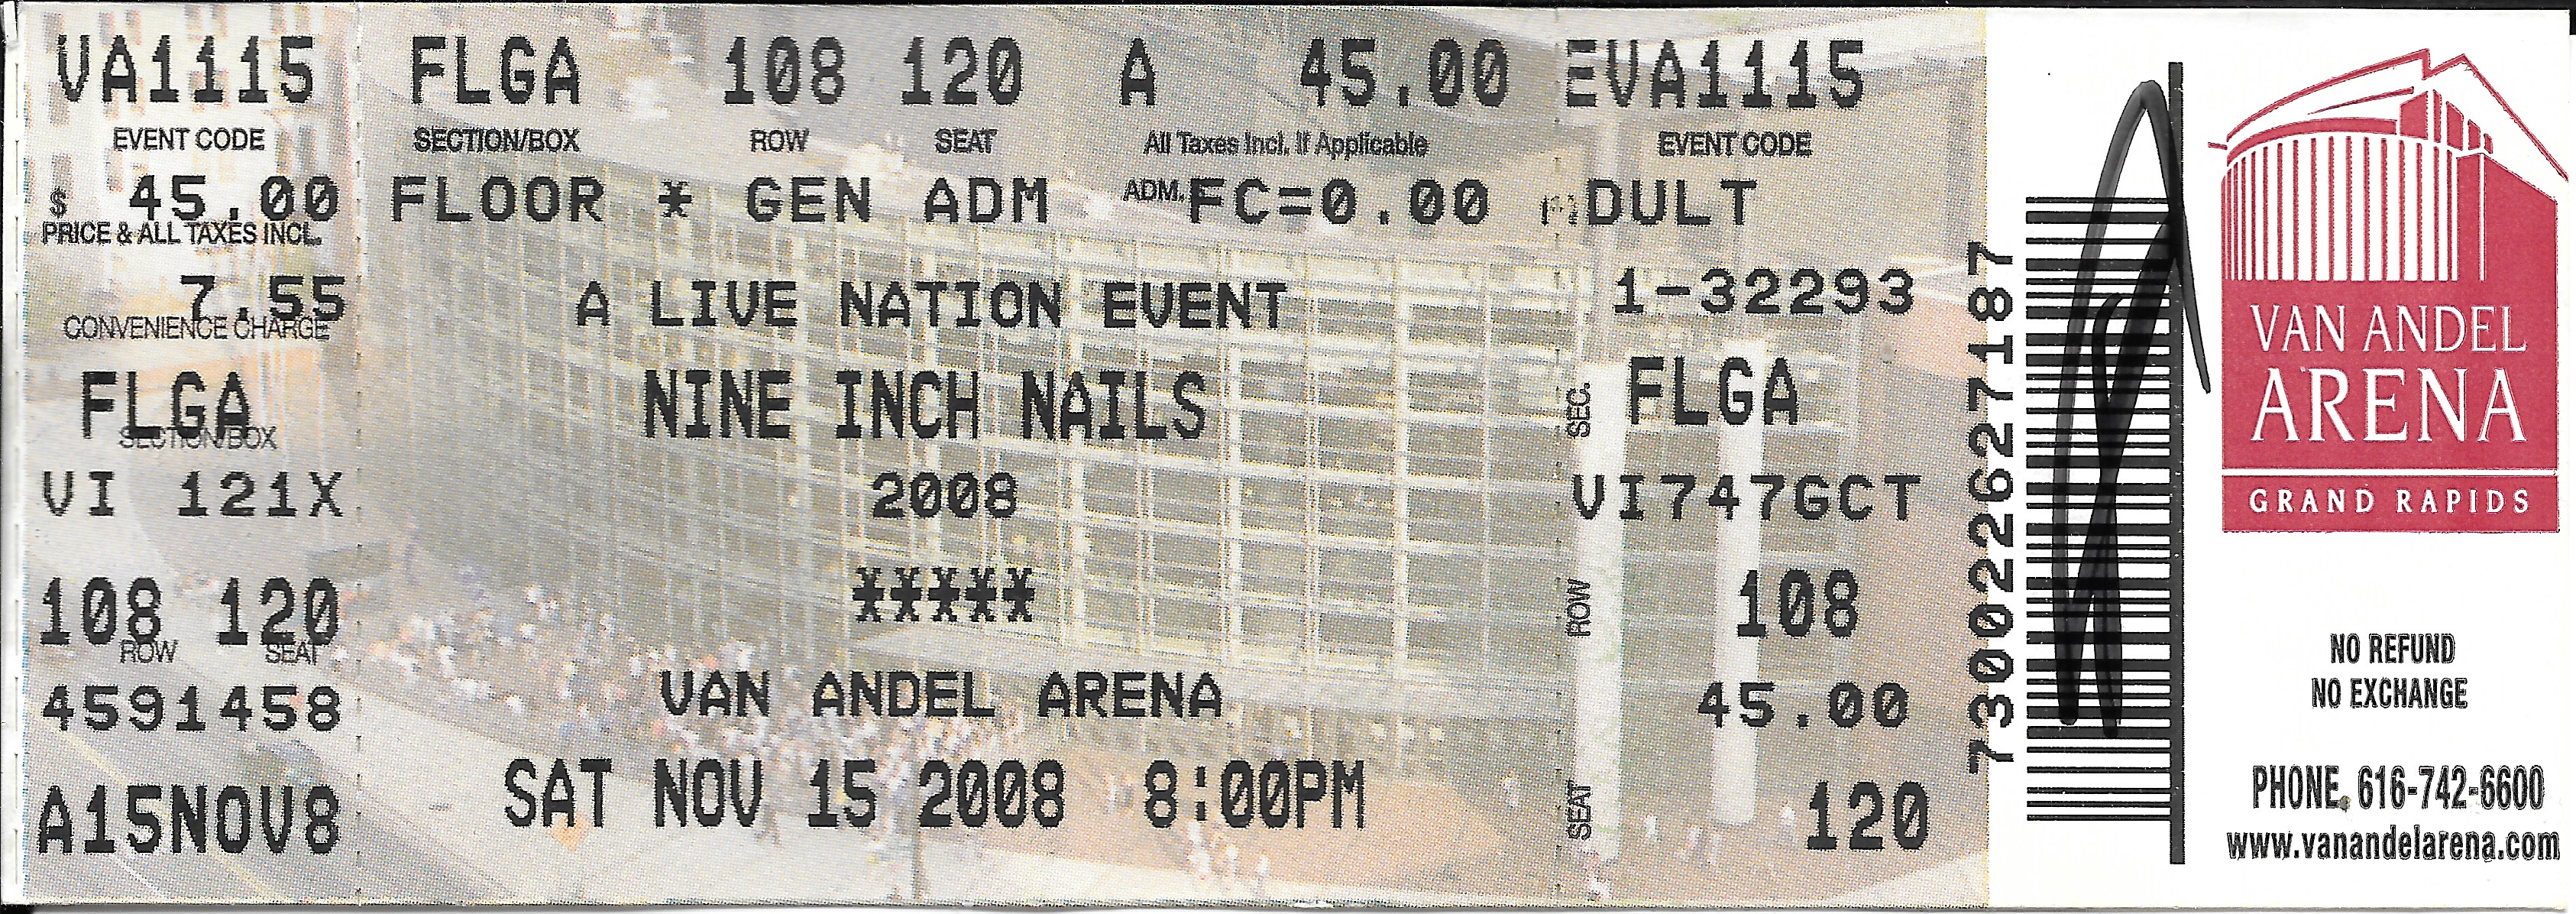 2008/11/15 Ticket